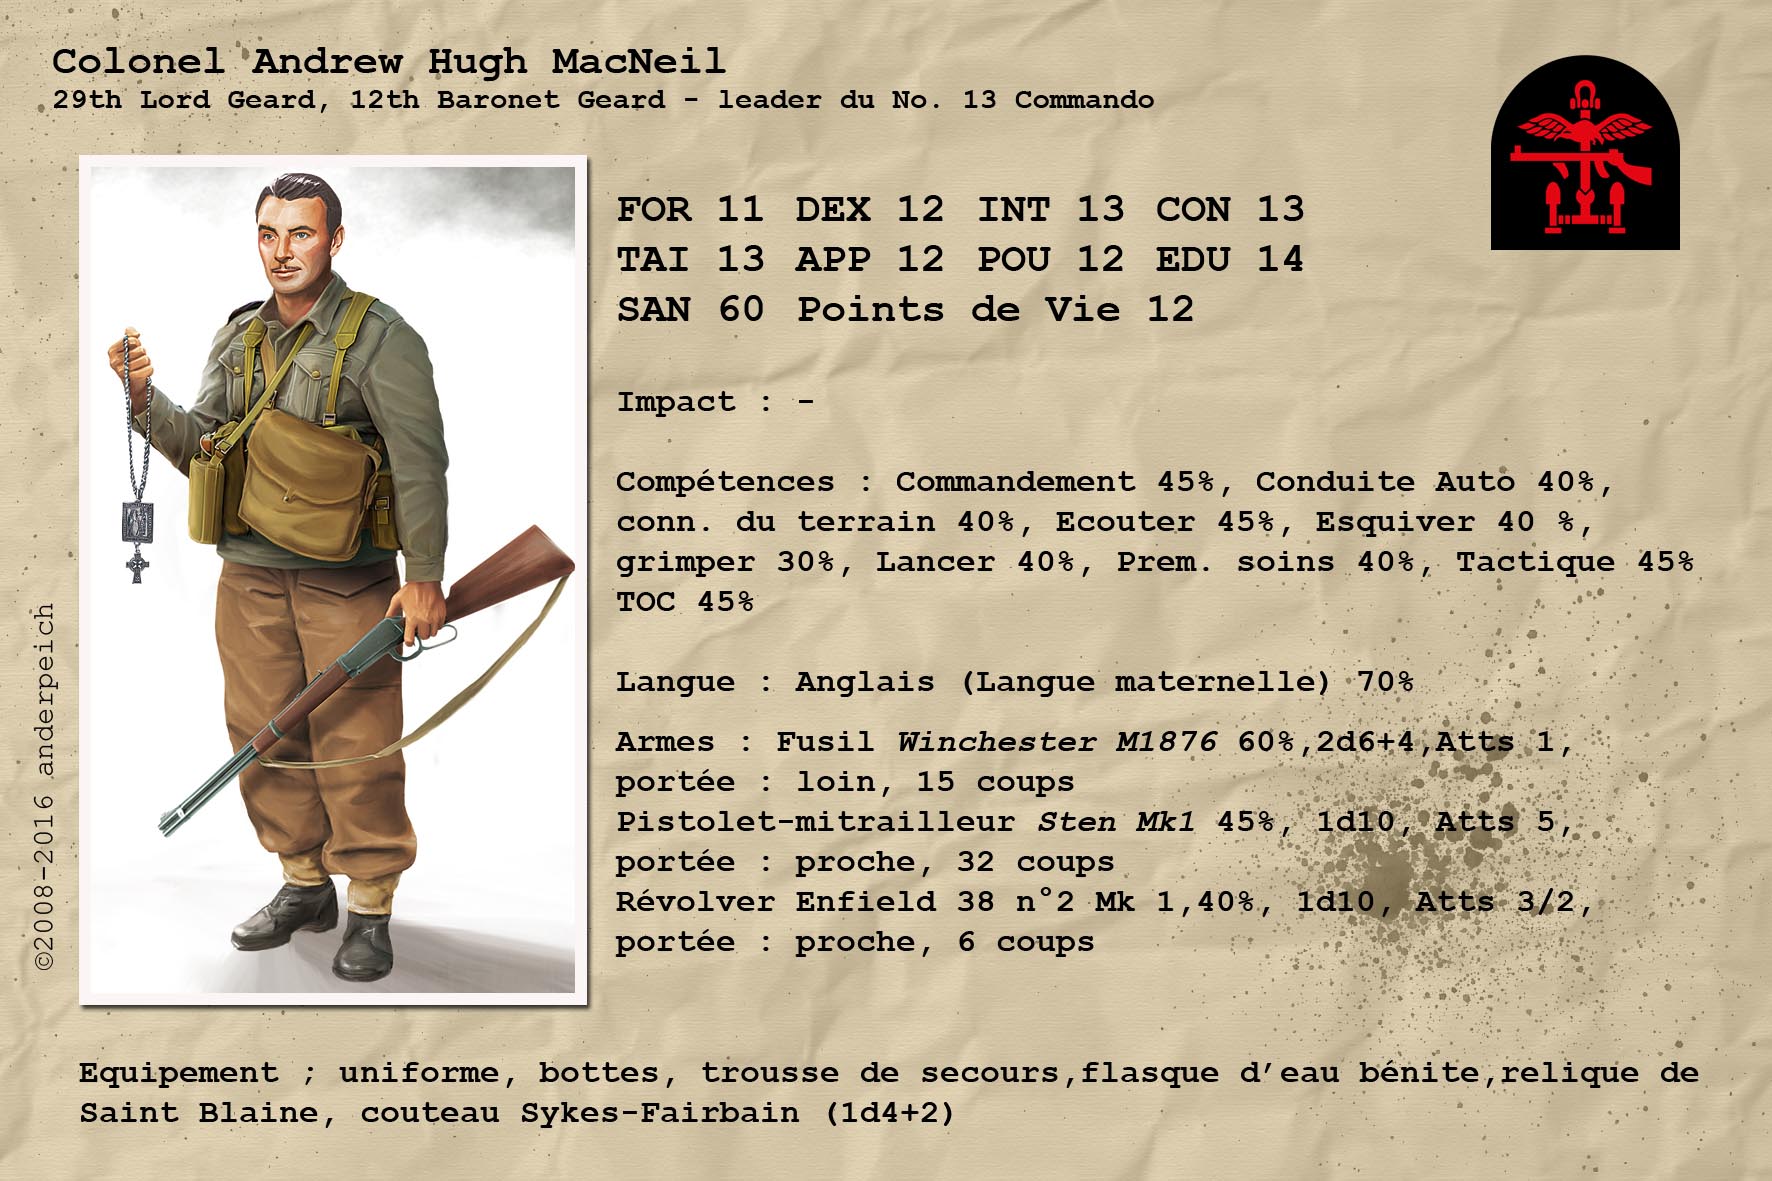 Colonel Andrew Hugh MacNeil